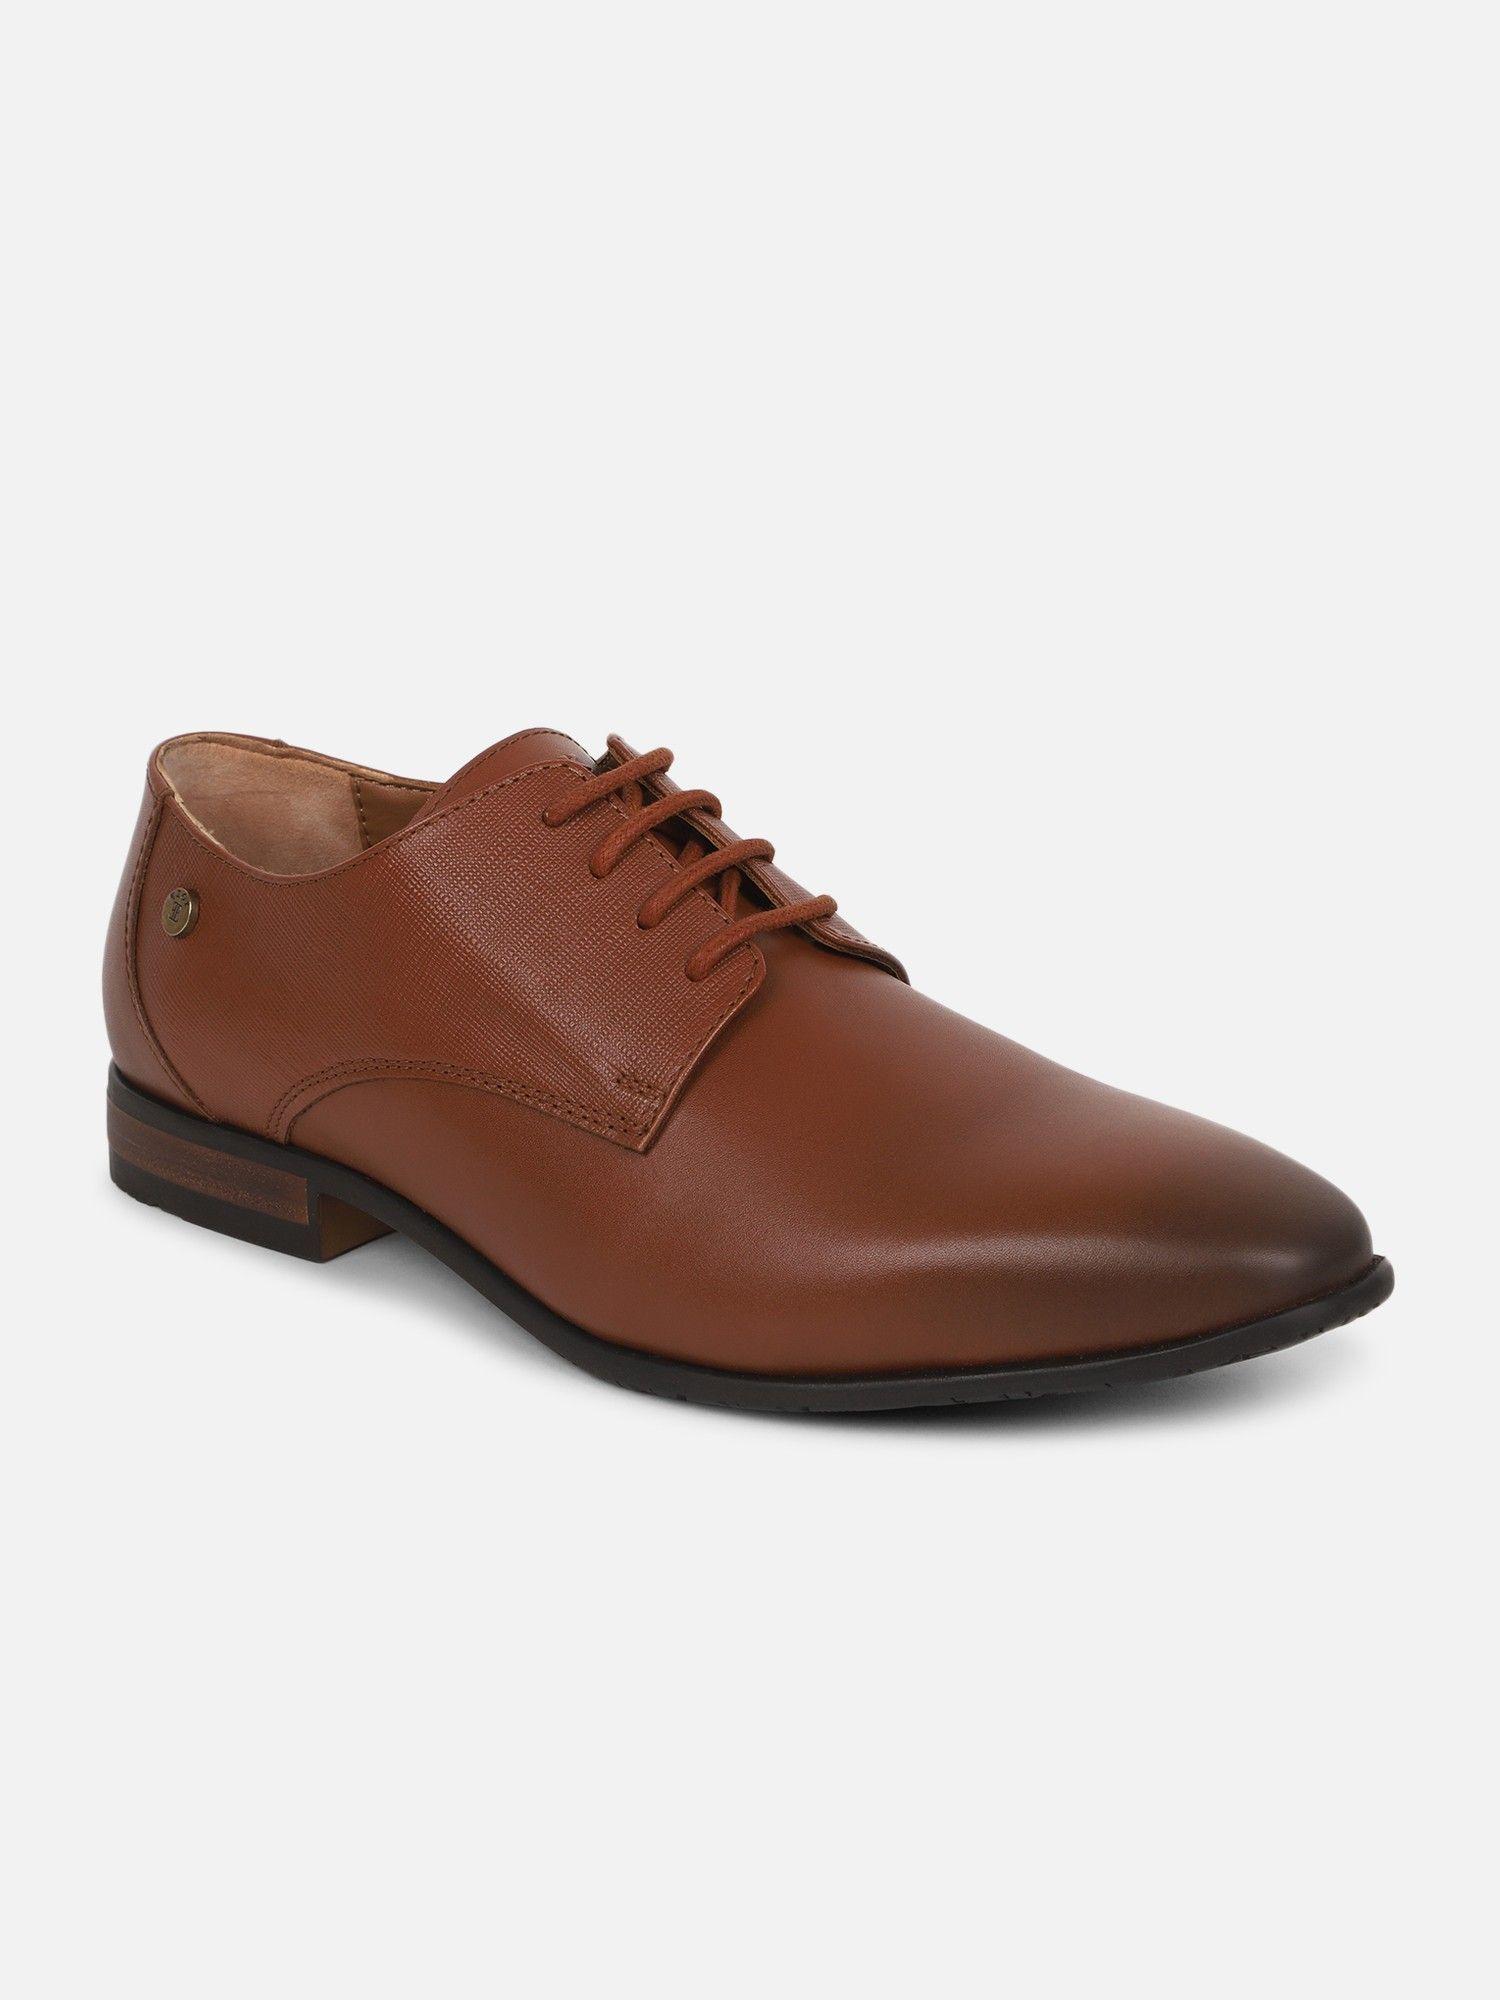 men formal leather shoes tan